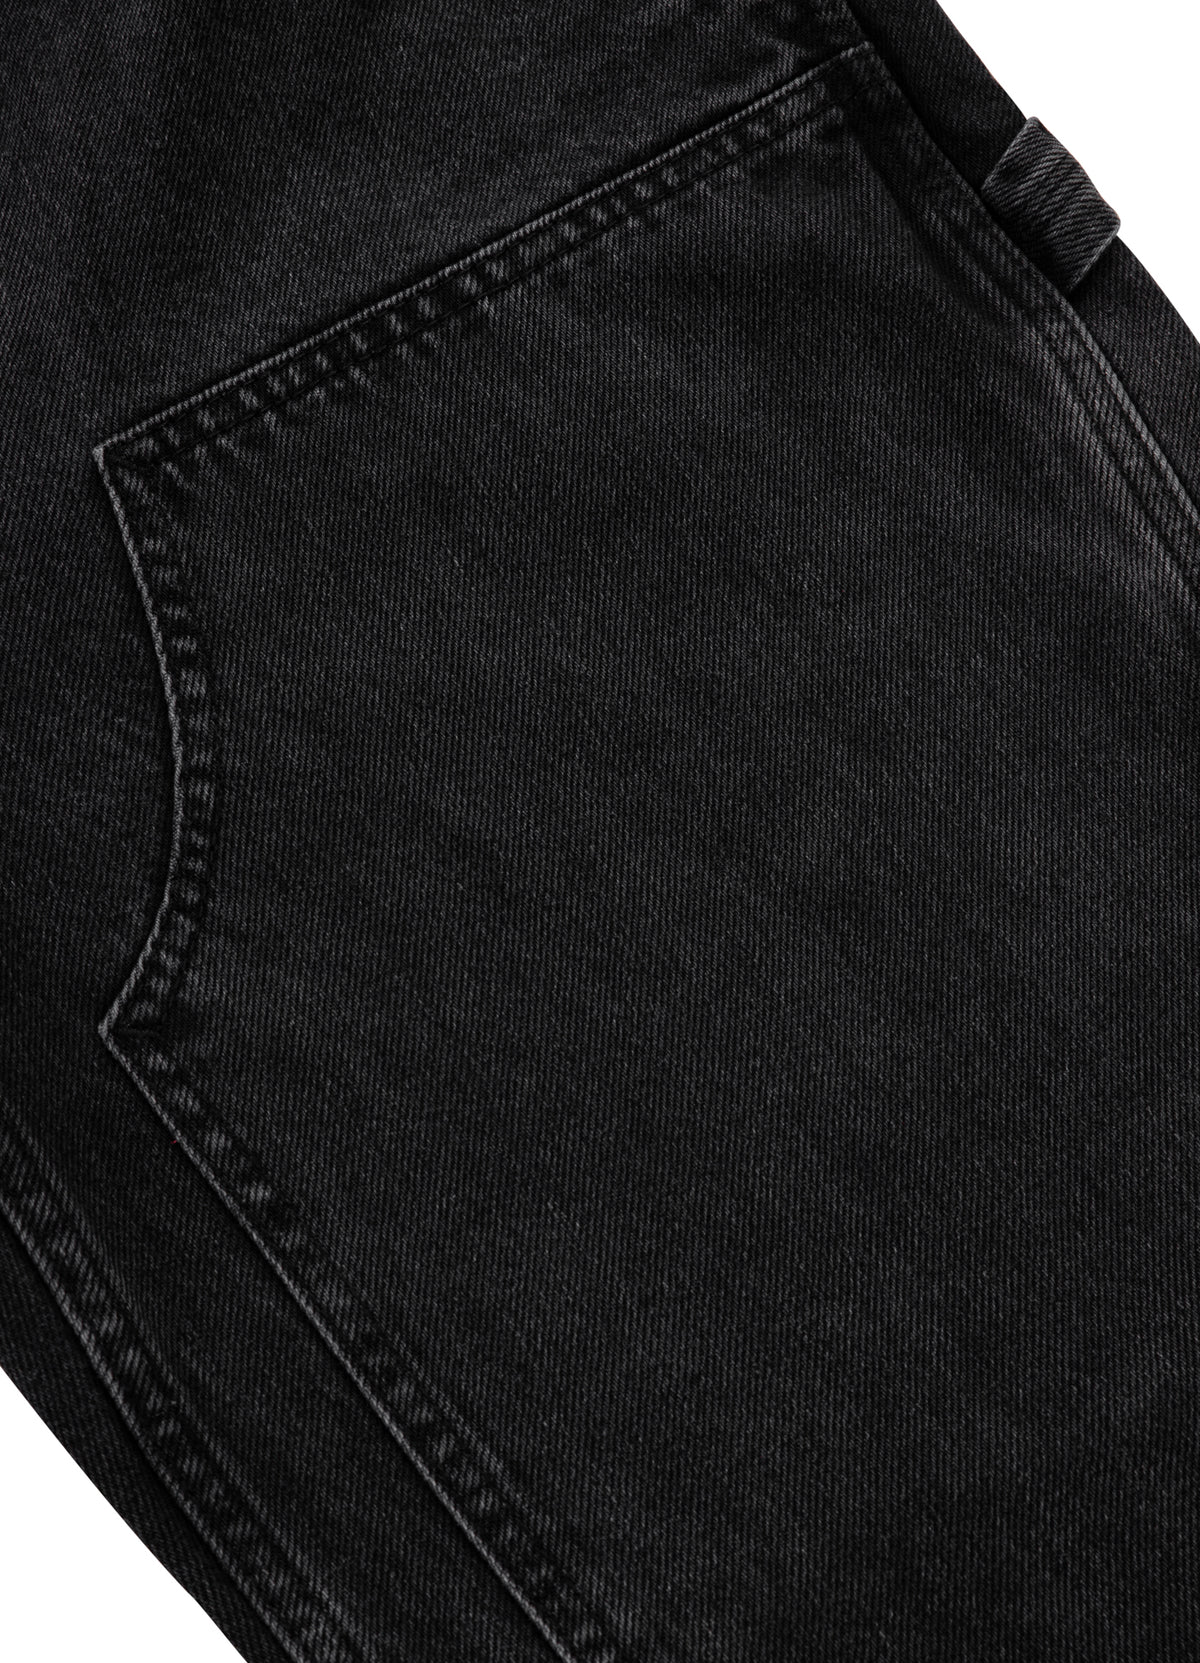 CARPENTER Black Denim Jeans - Pitbullstore.eu